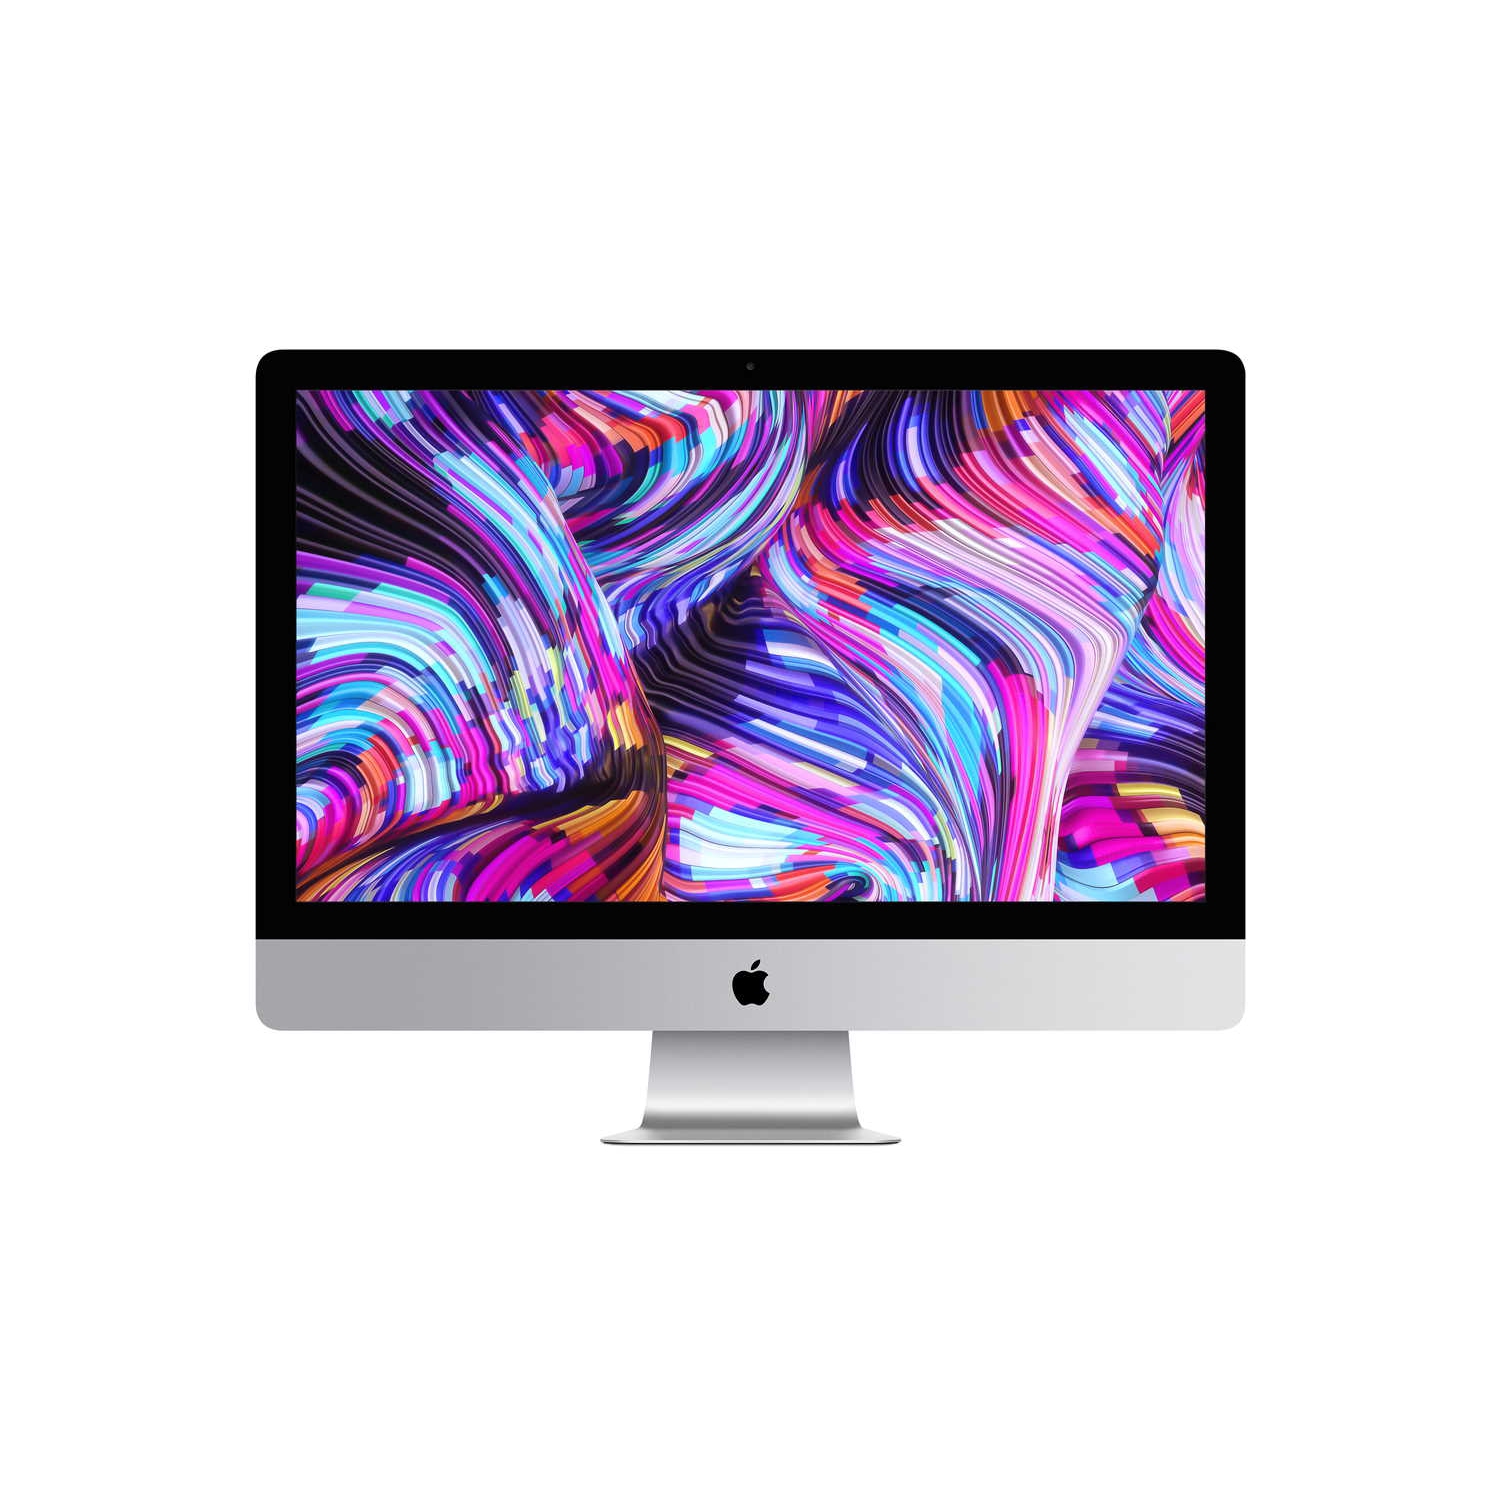 Refurbished - Good) iMac 21.5-inch (Retina 4K) 3.0GHZ 6-Core i5 